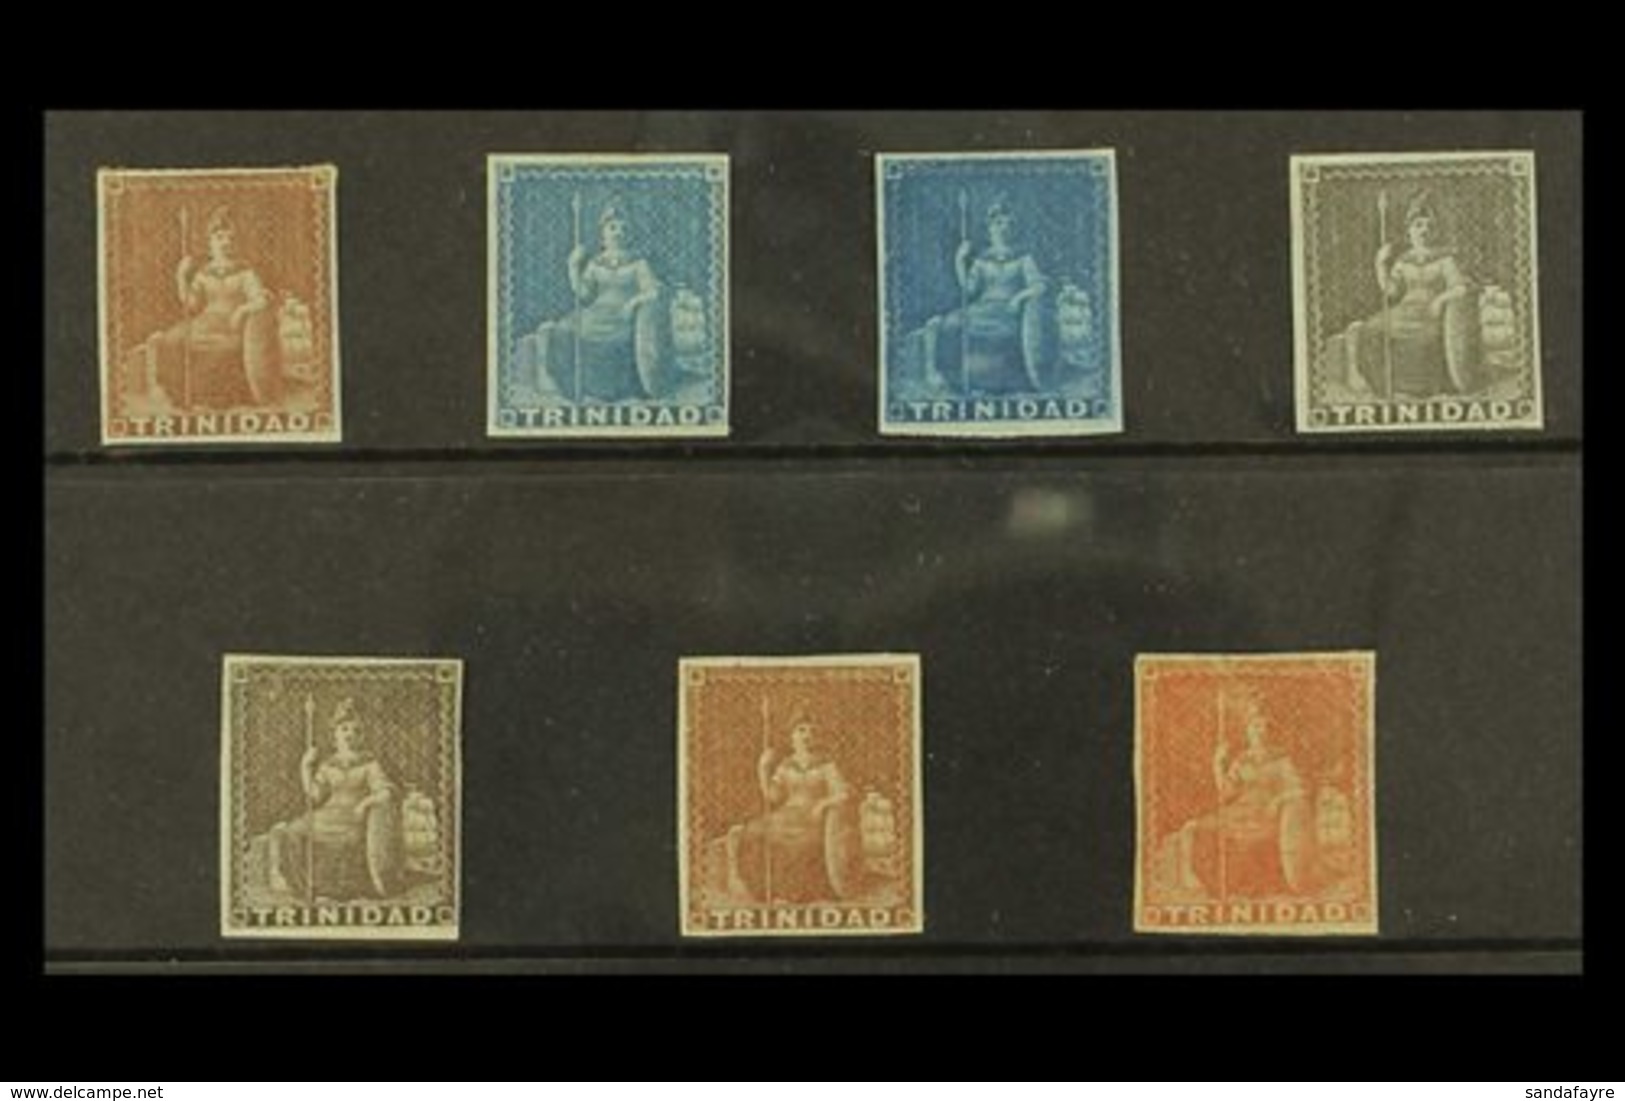 1851-55 Complete Imperf "blued Paper" Set, SG 2/8, All With 4 Clear Margins, Very Fine Mint Set (7 Stamps) For More Imag - Trinidad & Tobago (...-1961)